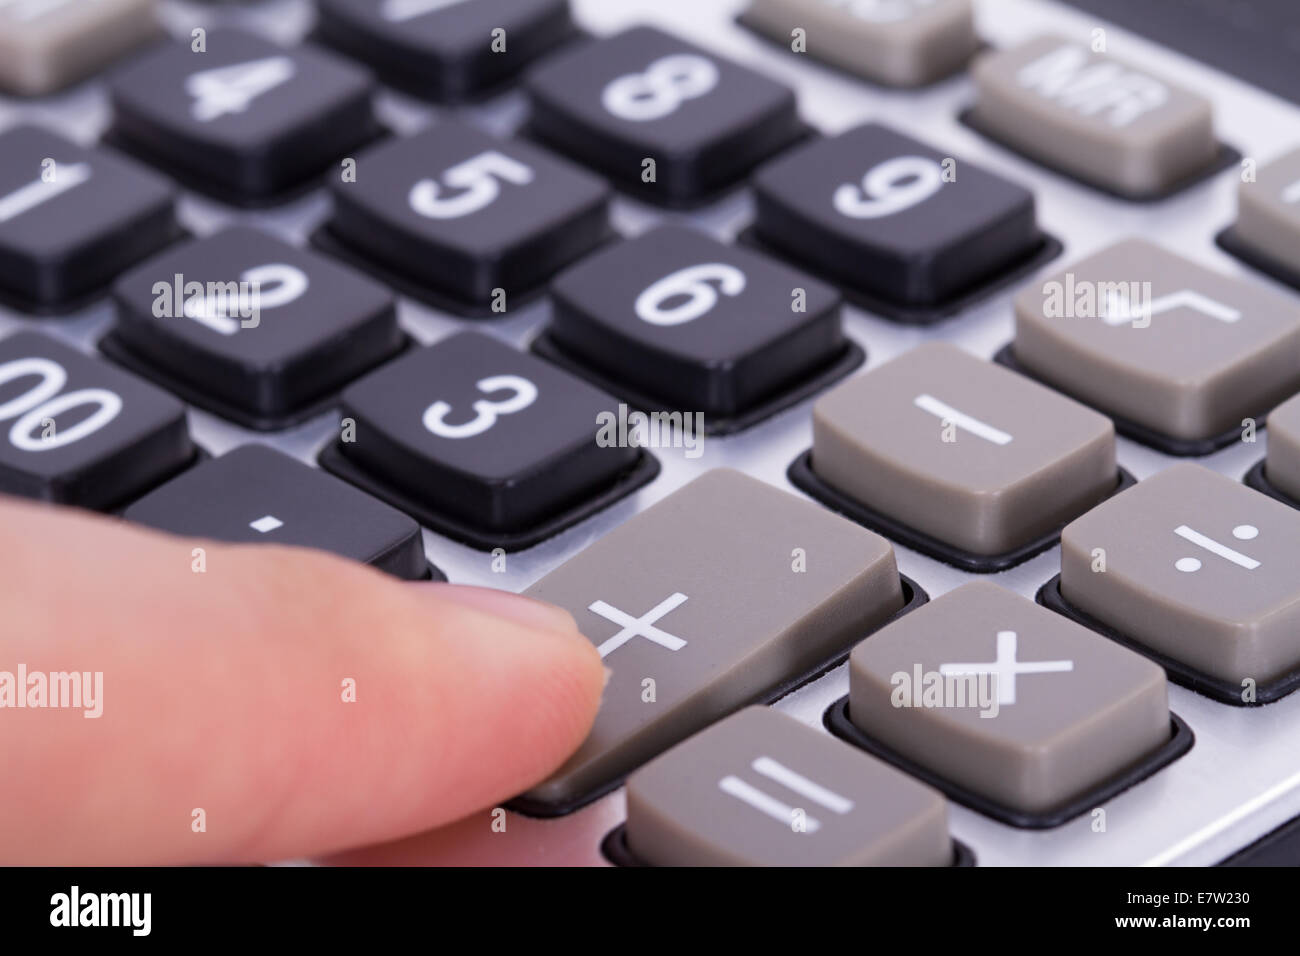 Finger pressing plus button of calculator. Stock Photo